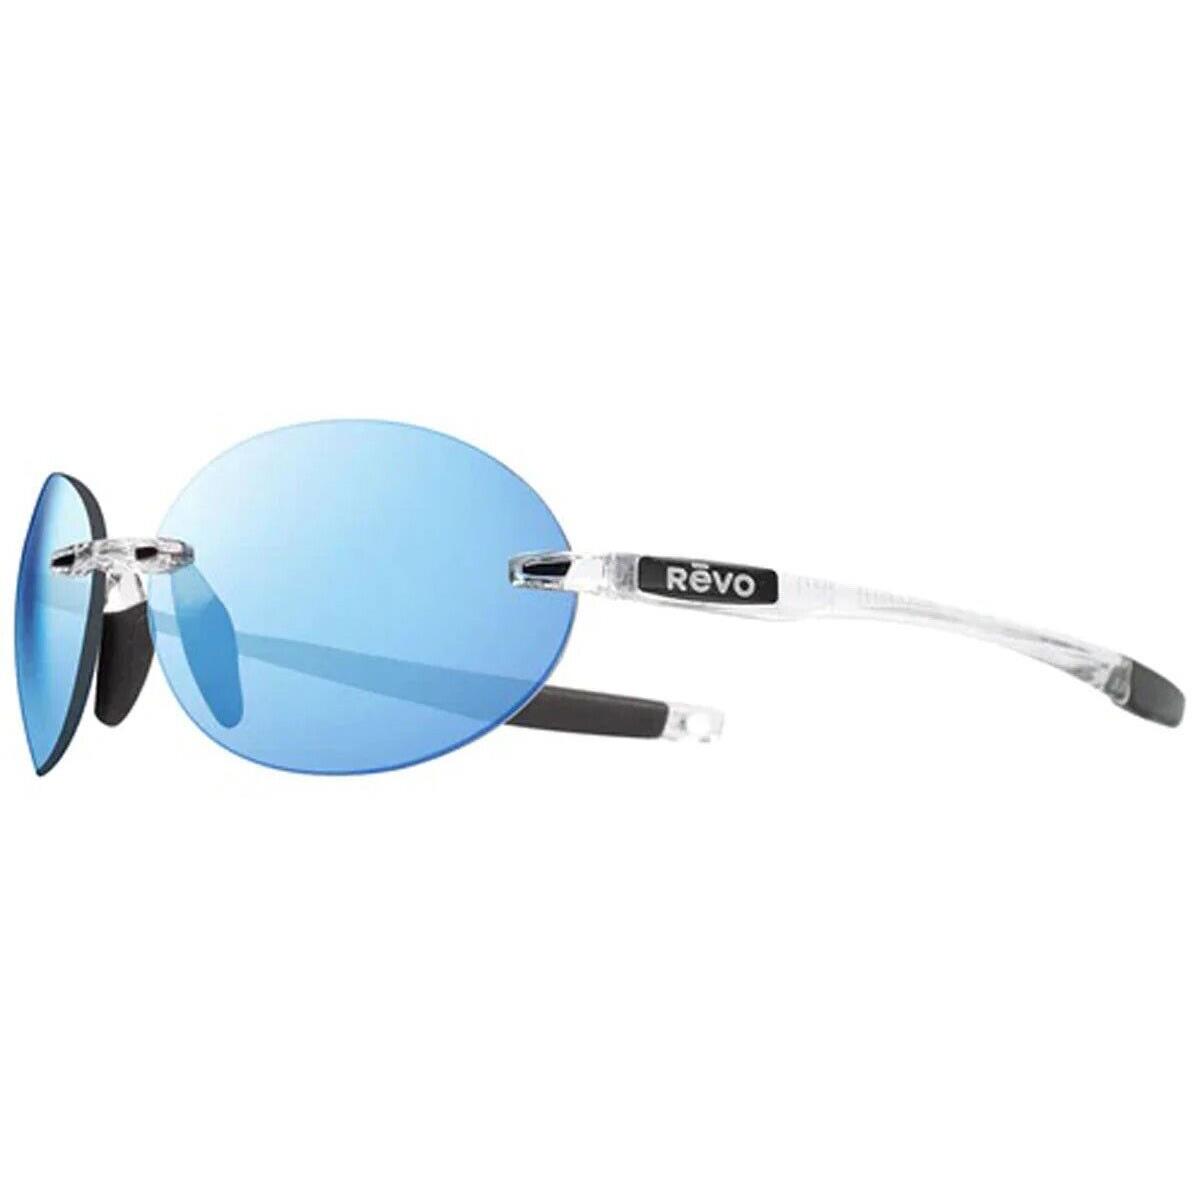 Revo Sunglasses Descend O RE1168 09BL Crystal Blue Water Polarized Lens 61mm - Clear Frame, Blue Lens